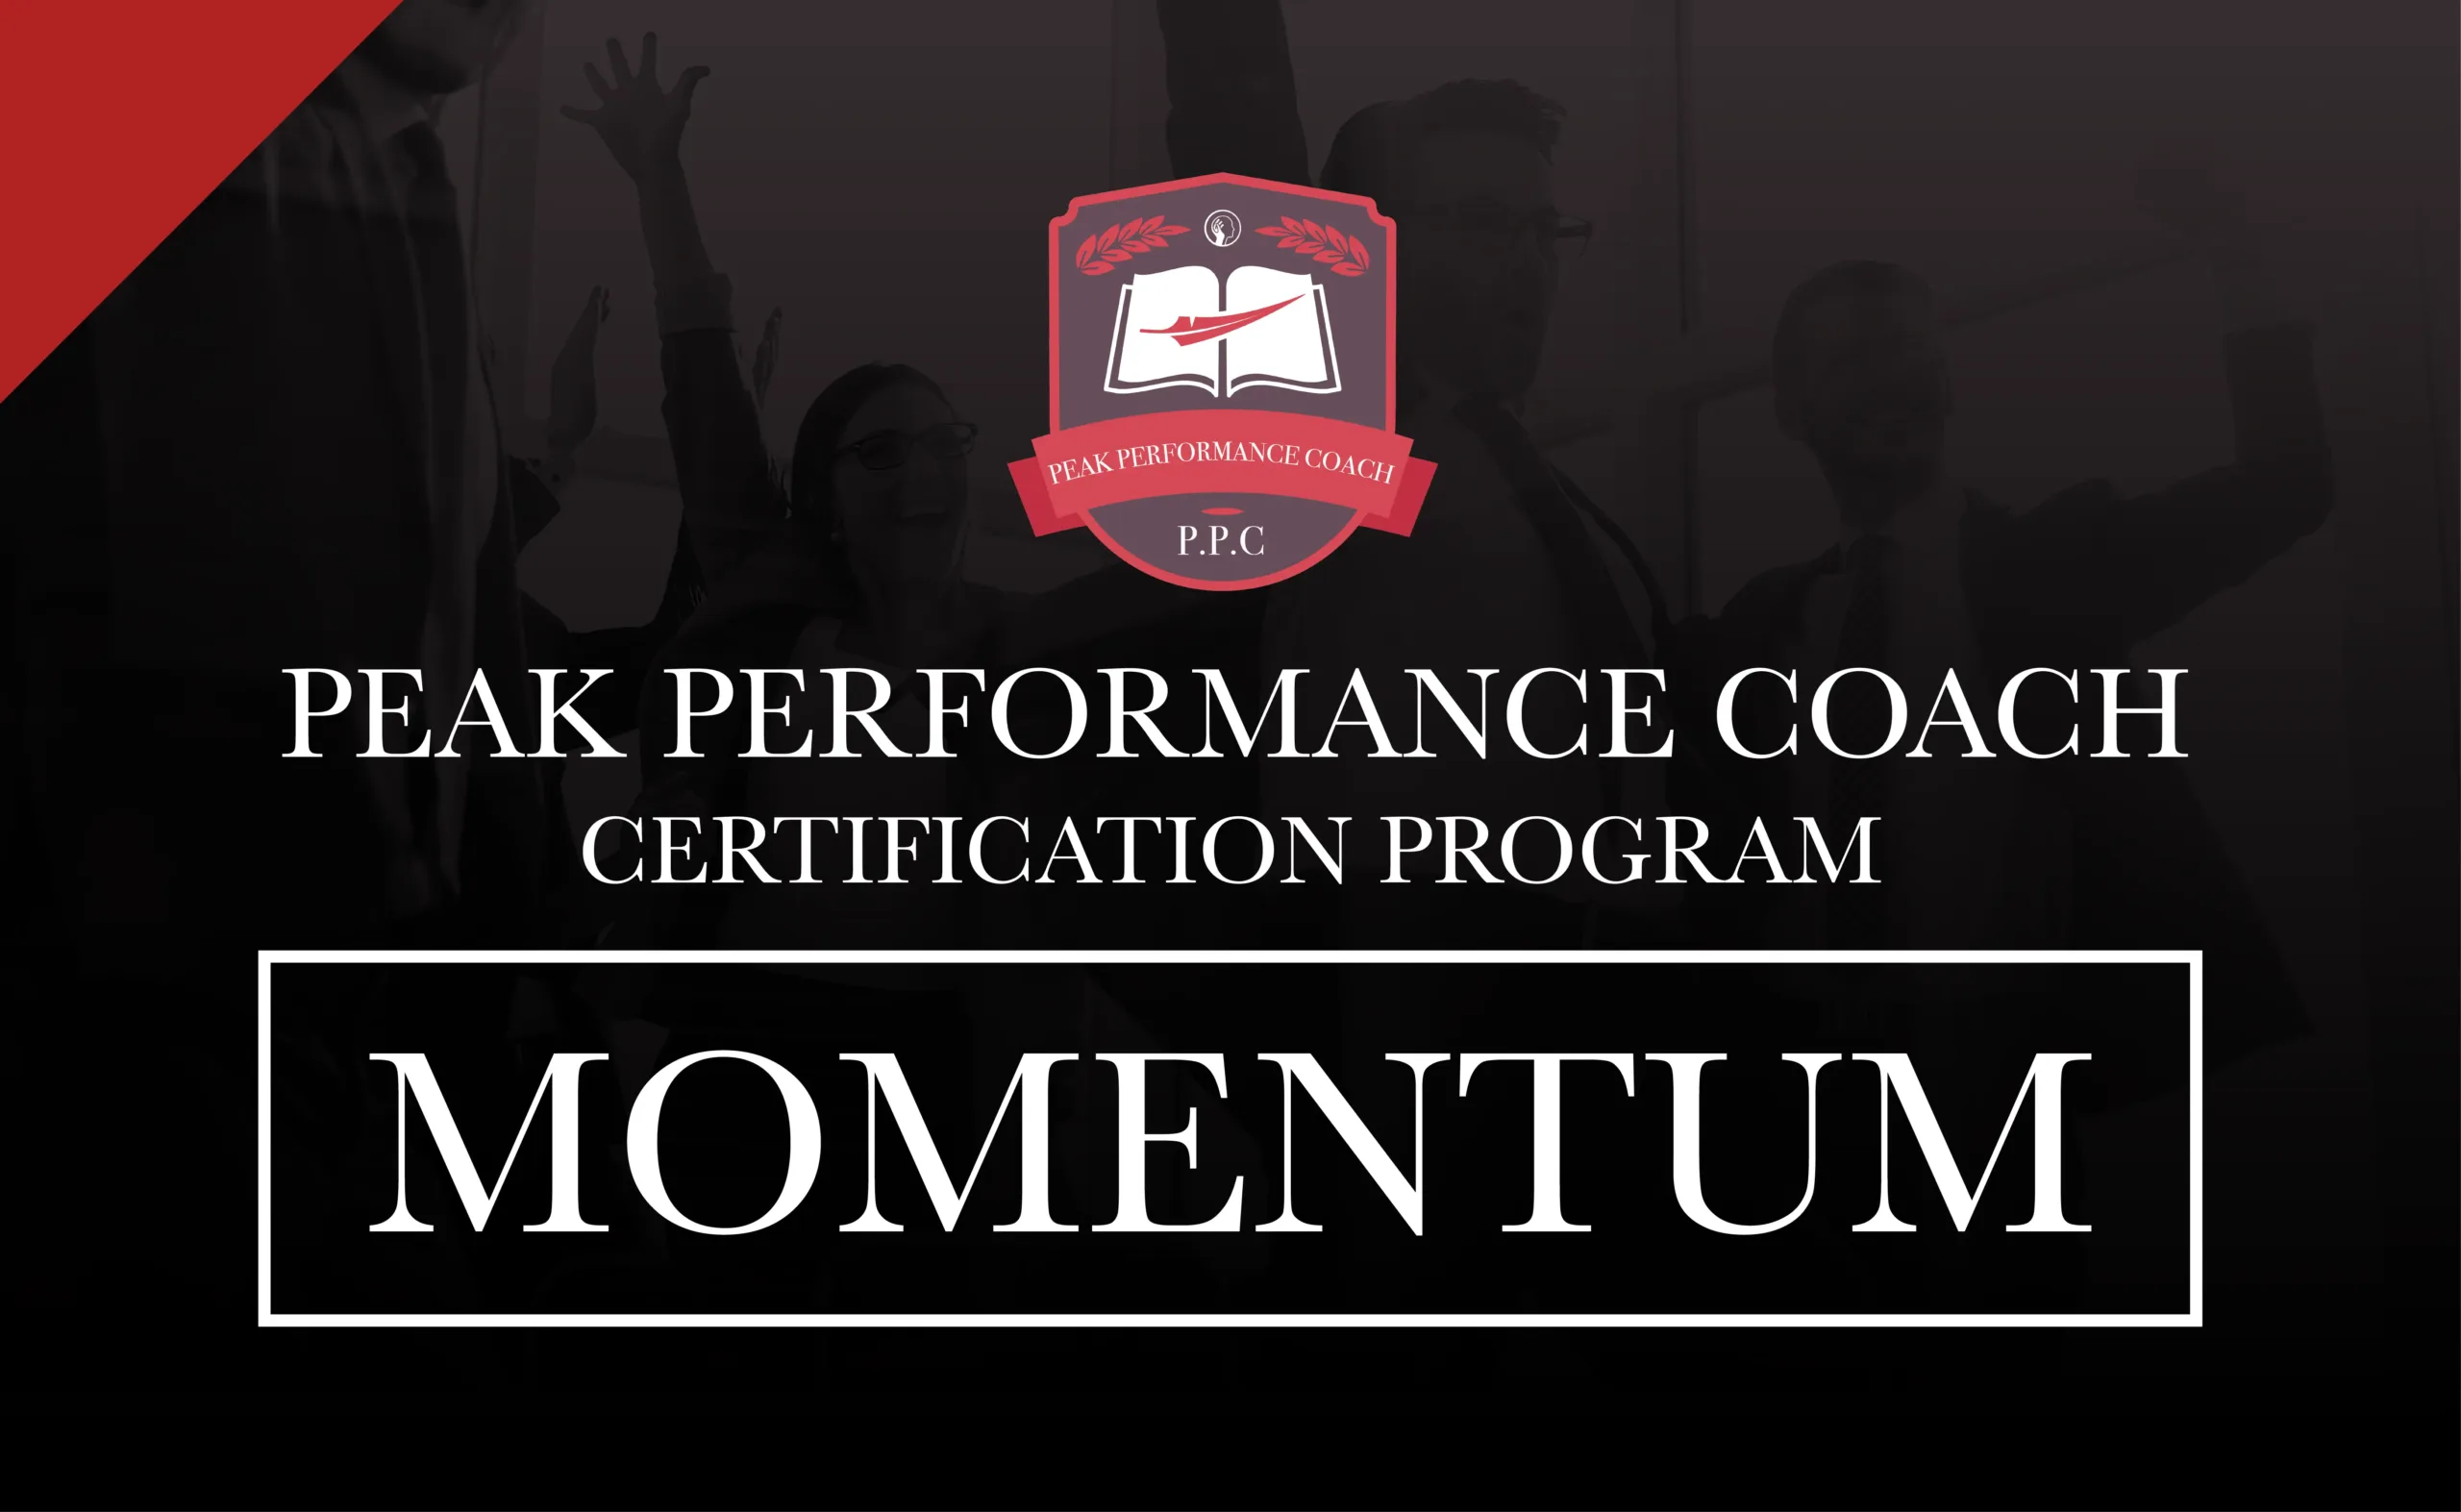 Peak Performance Coach – MOMENTUM